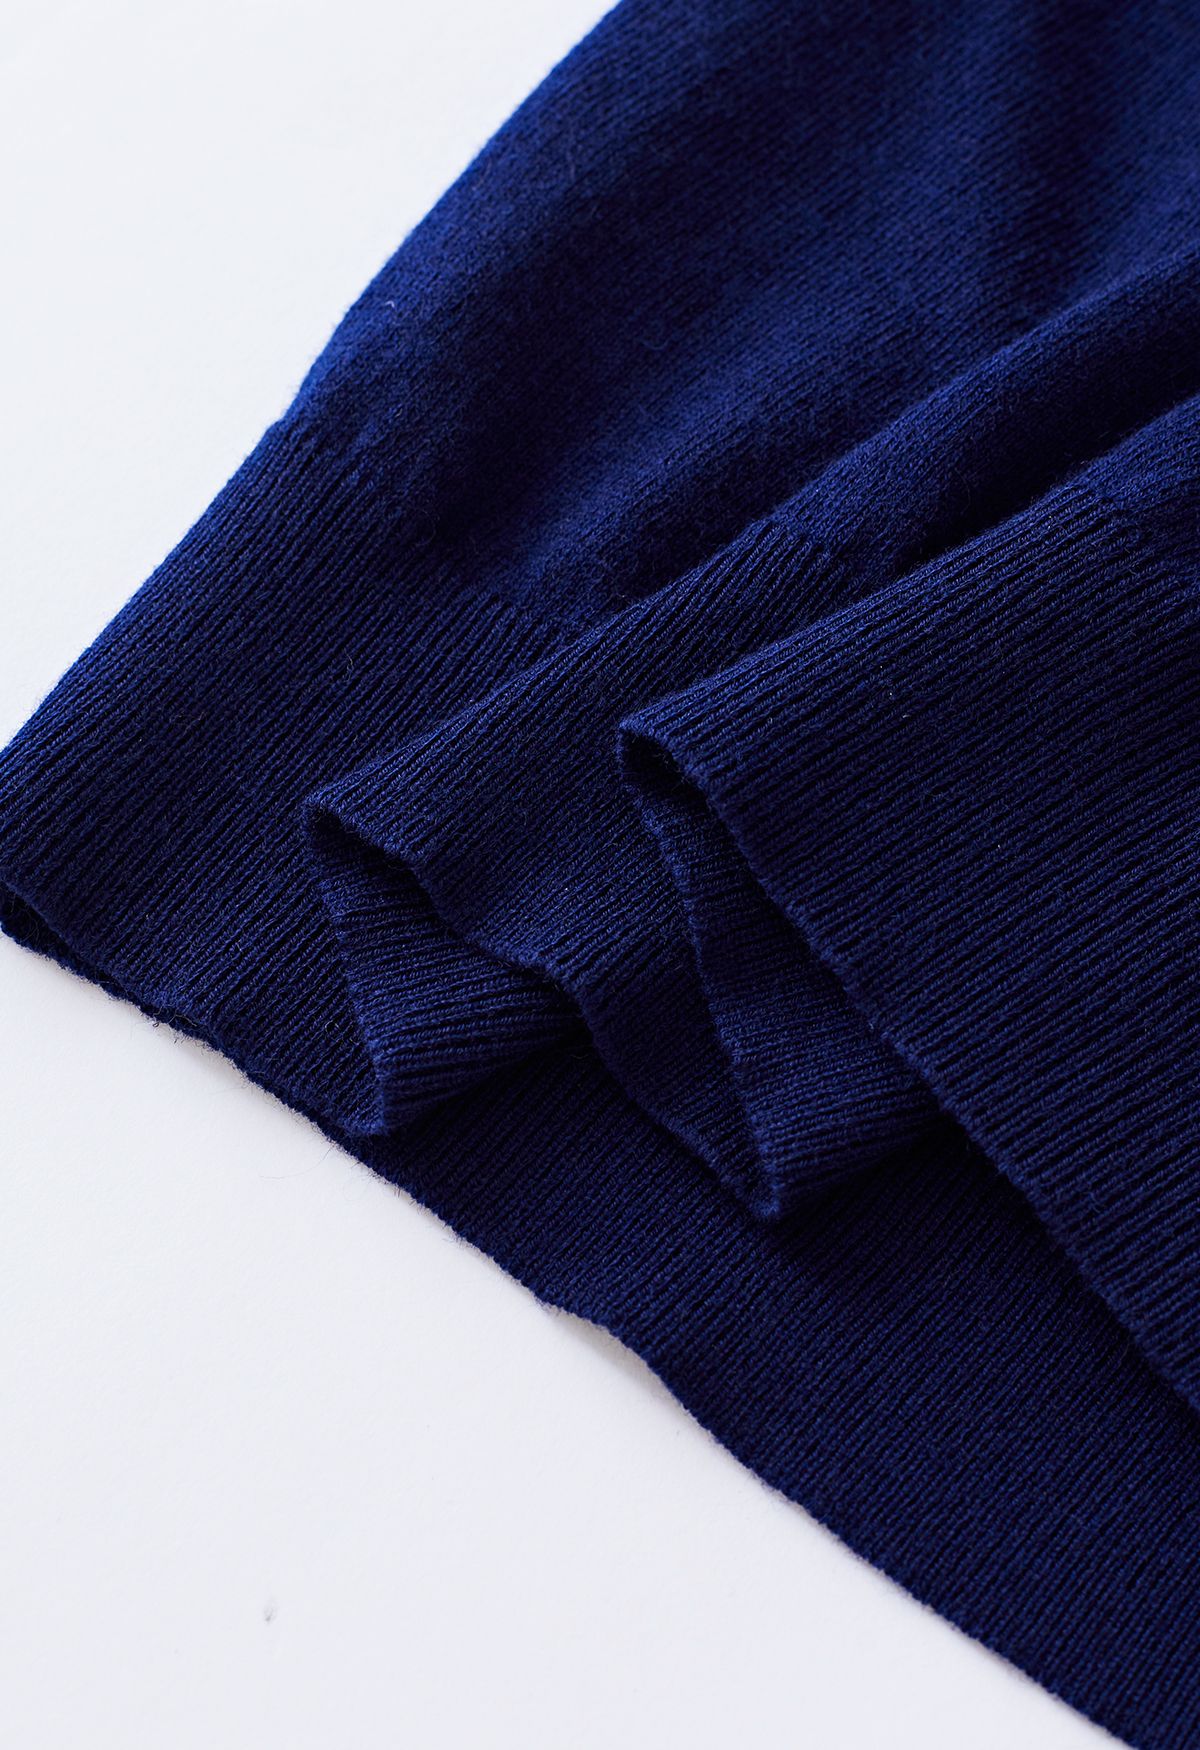 Color Blocked Turtleneck Knit Top in Navy